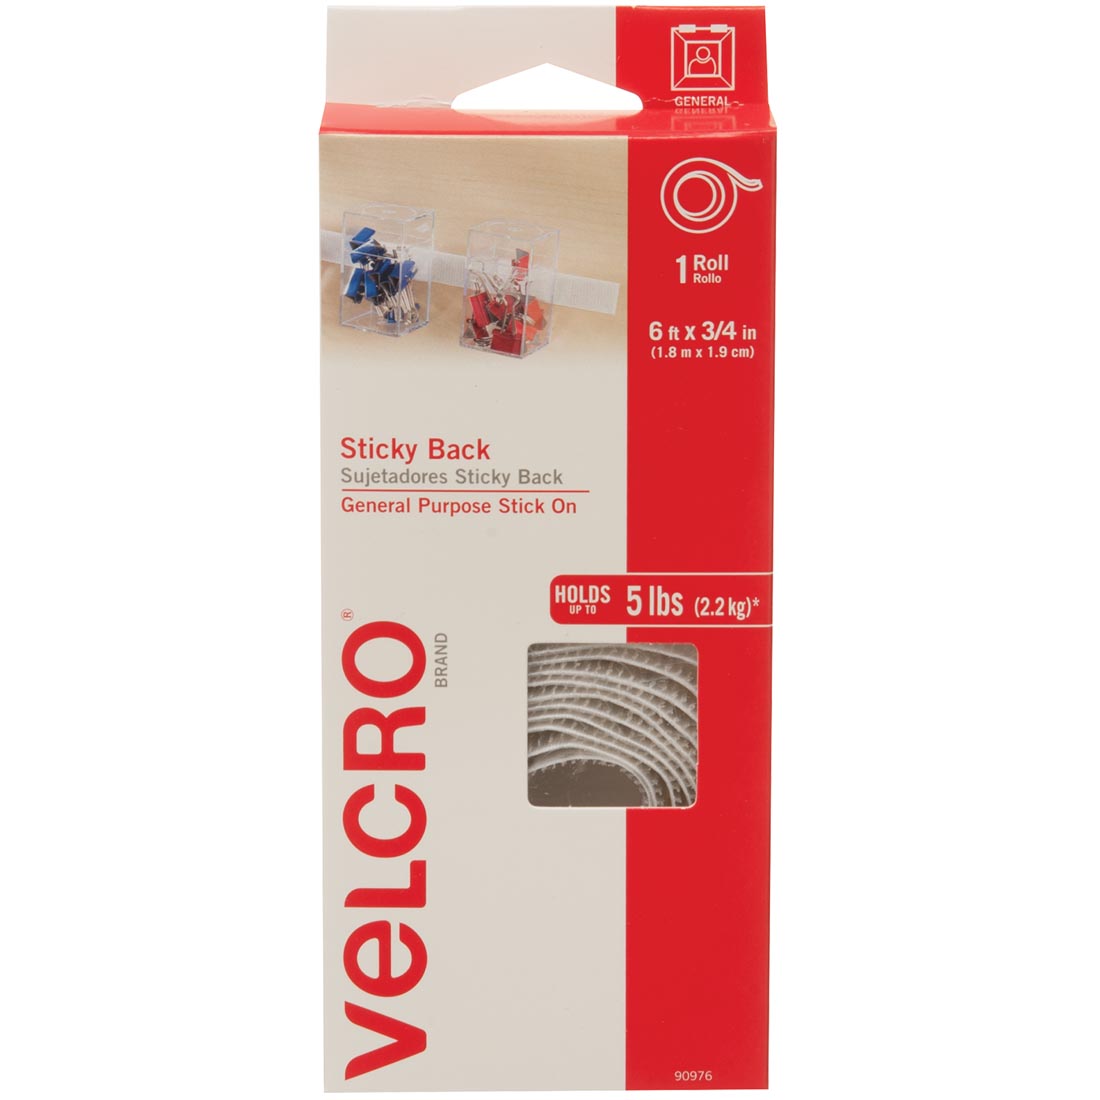 Package of VELCRO Brand Sticky Back White Tape